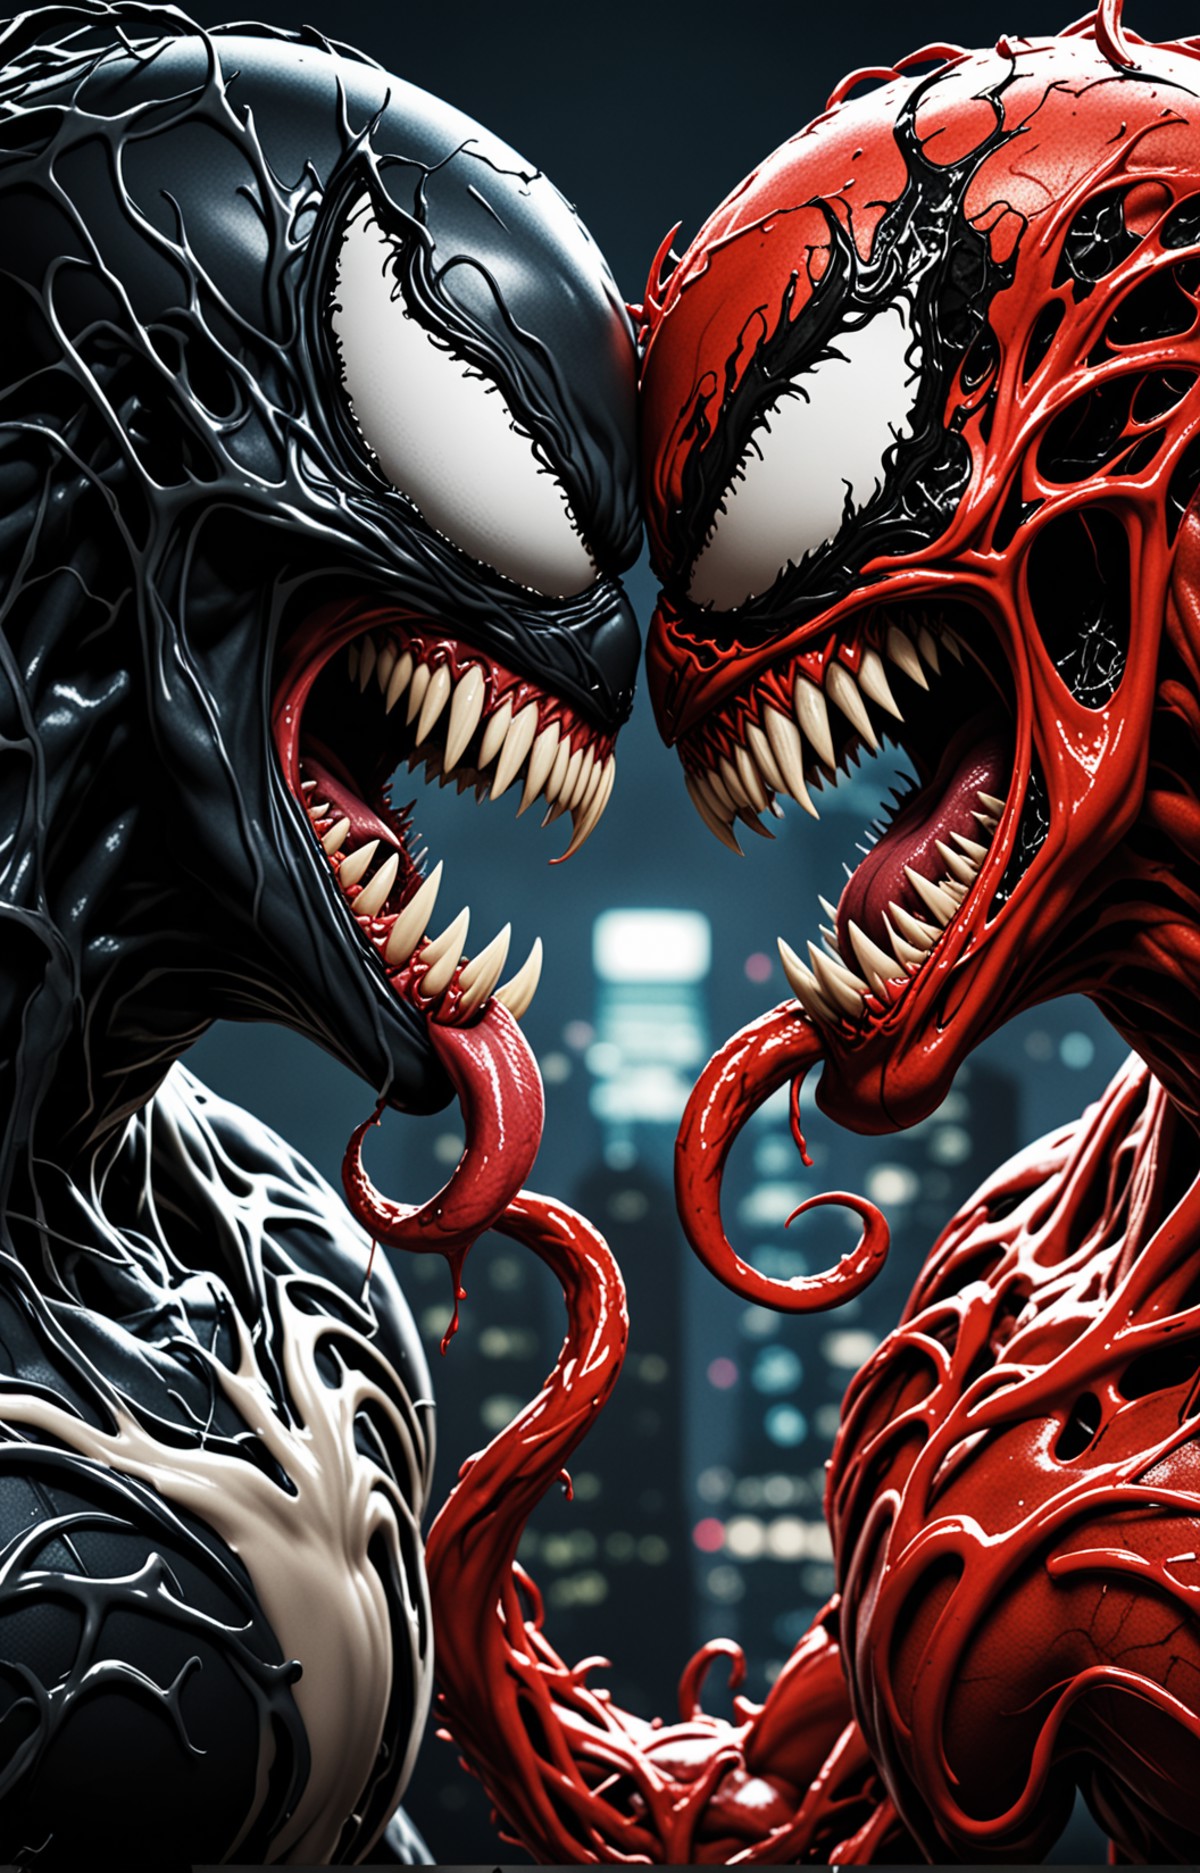 Venom VS Carnage from the movie Venom, intricate 8K detailing, movie poster, UHD